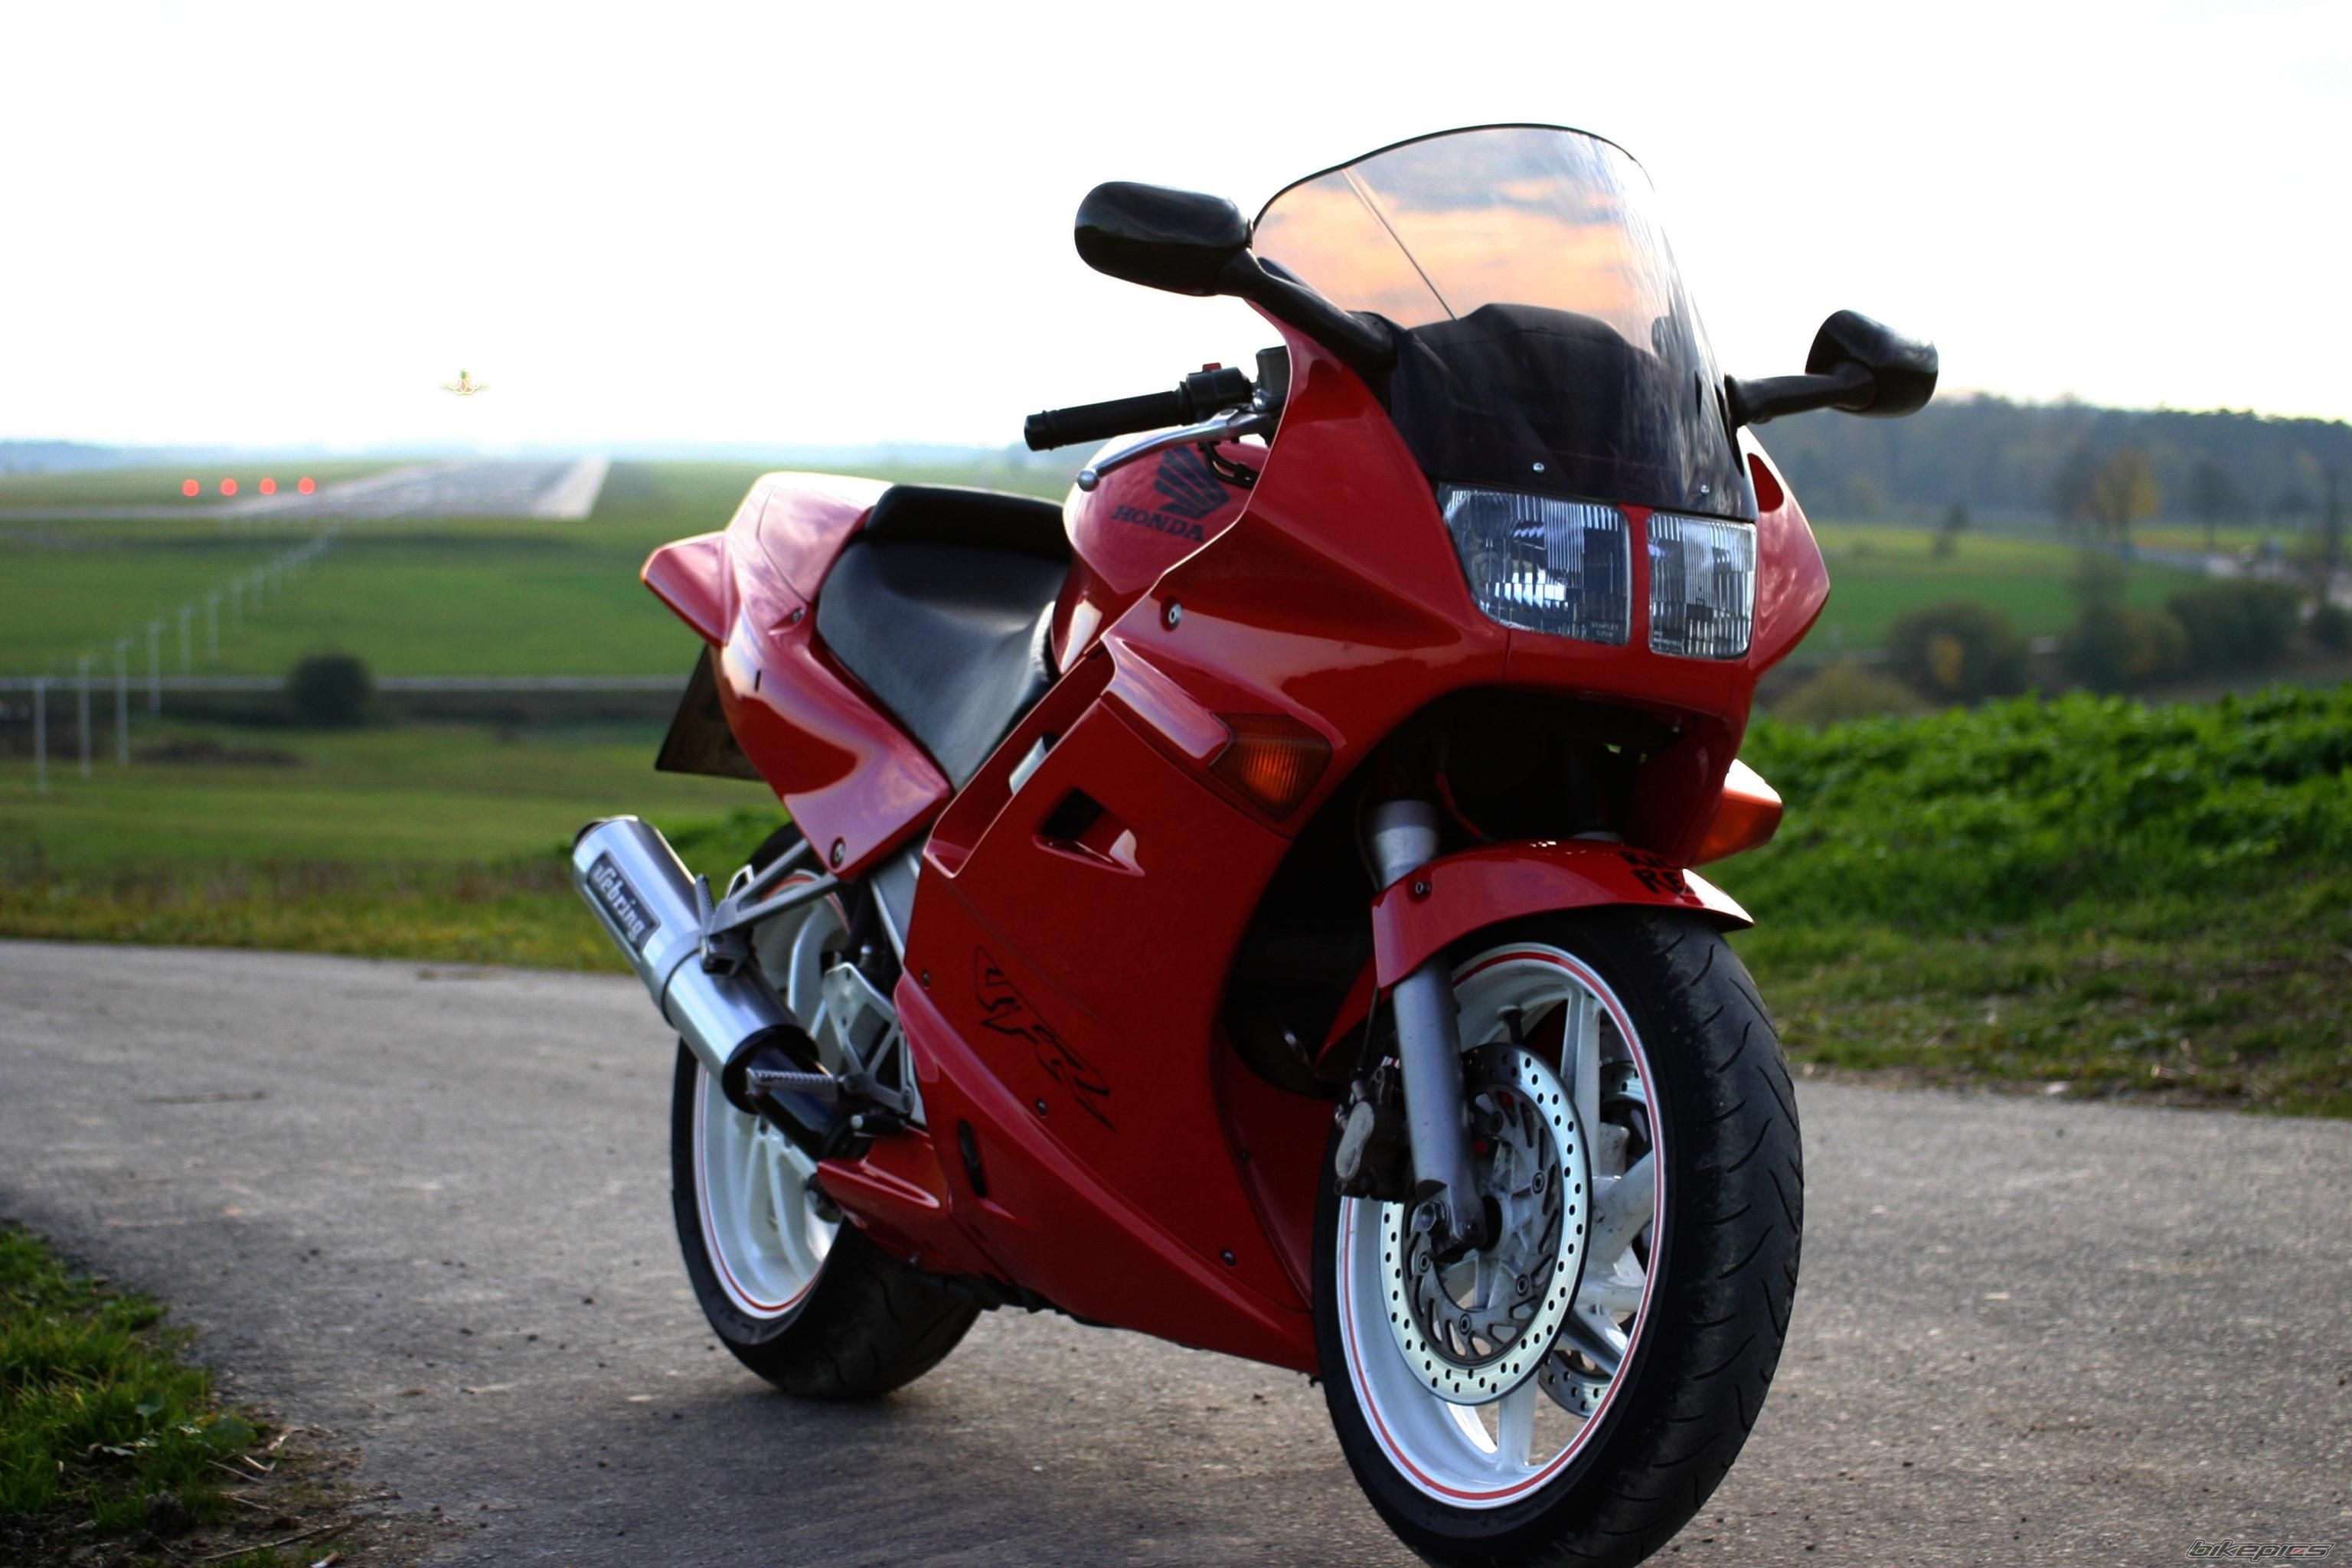 Honda VFR750F Interceptor, Legendary bike, Classic design, Thrilling ride, 3080x2050 HD Desktop